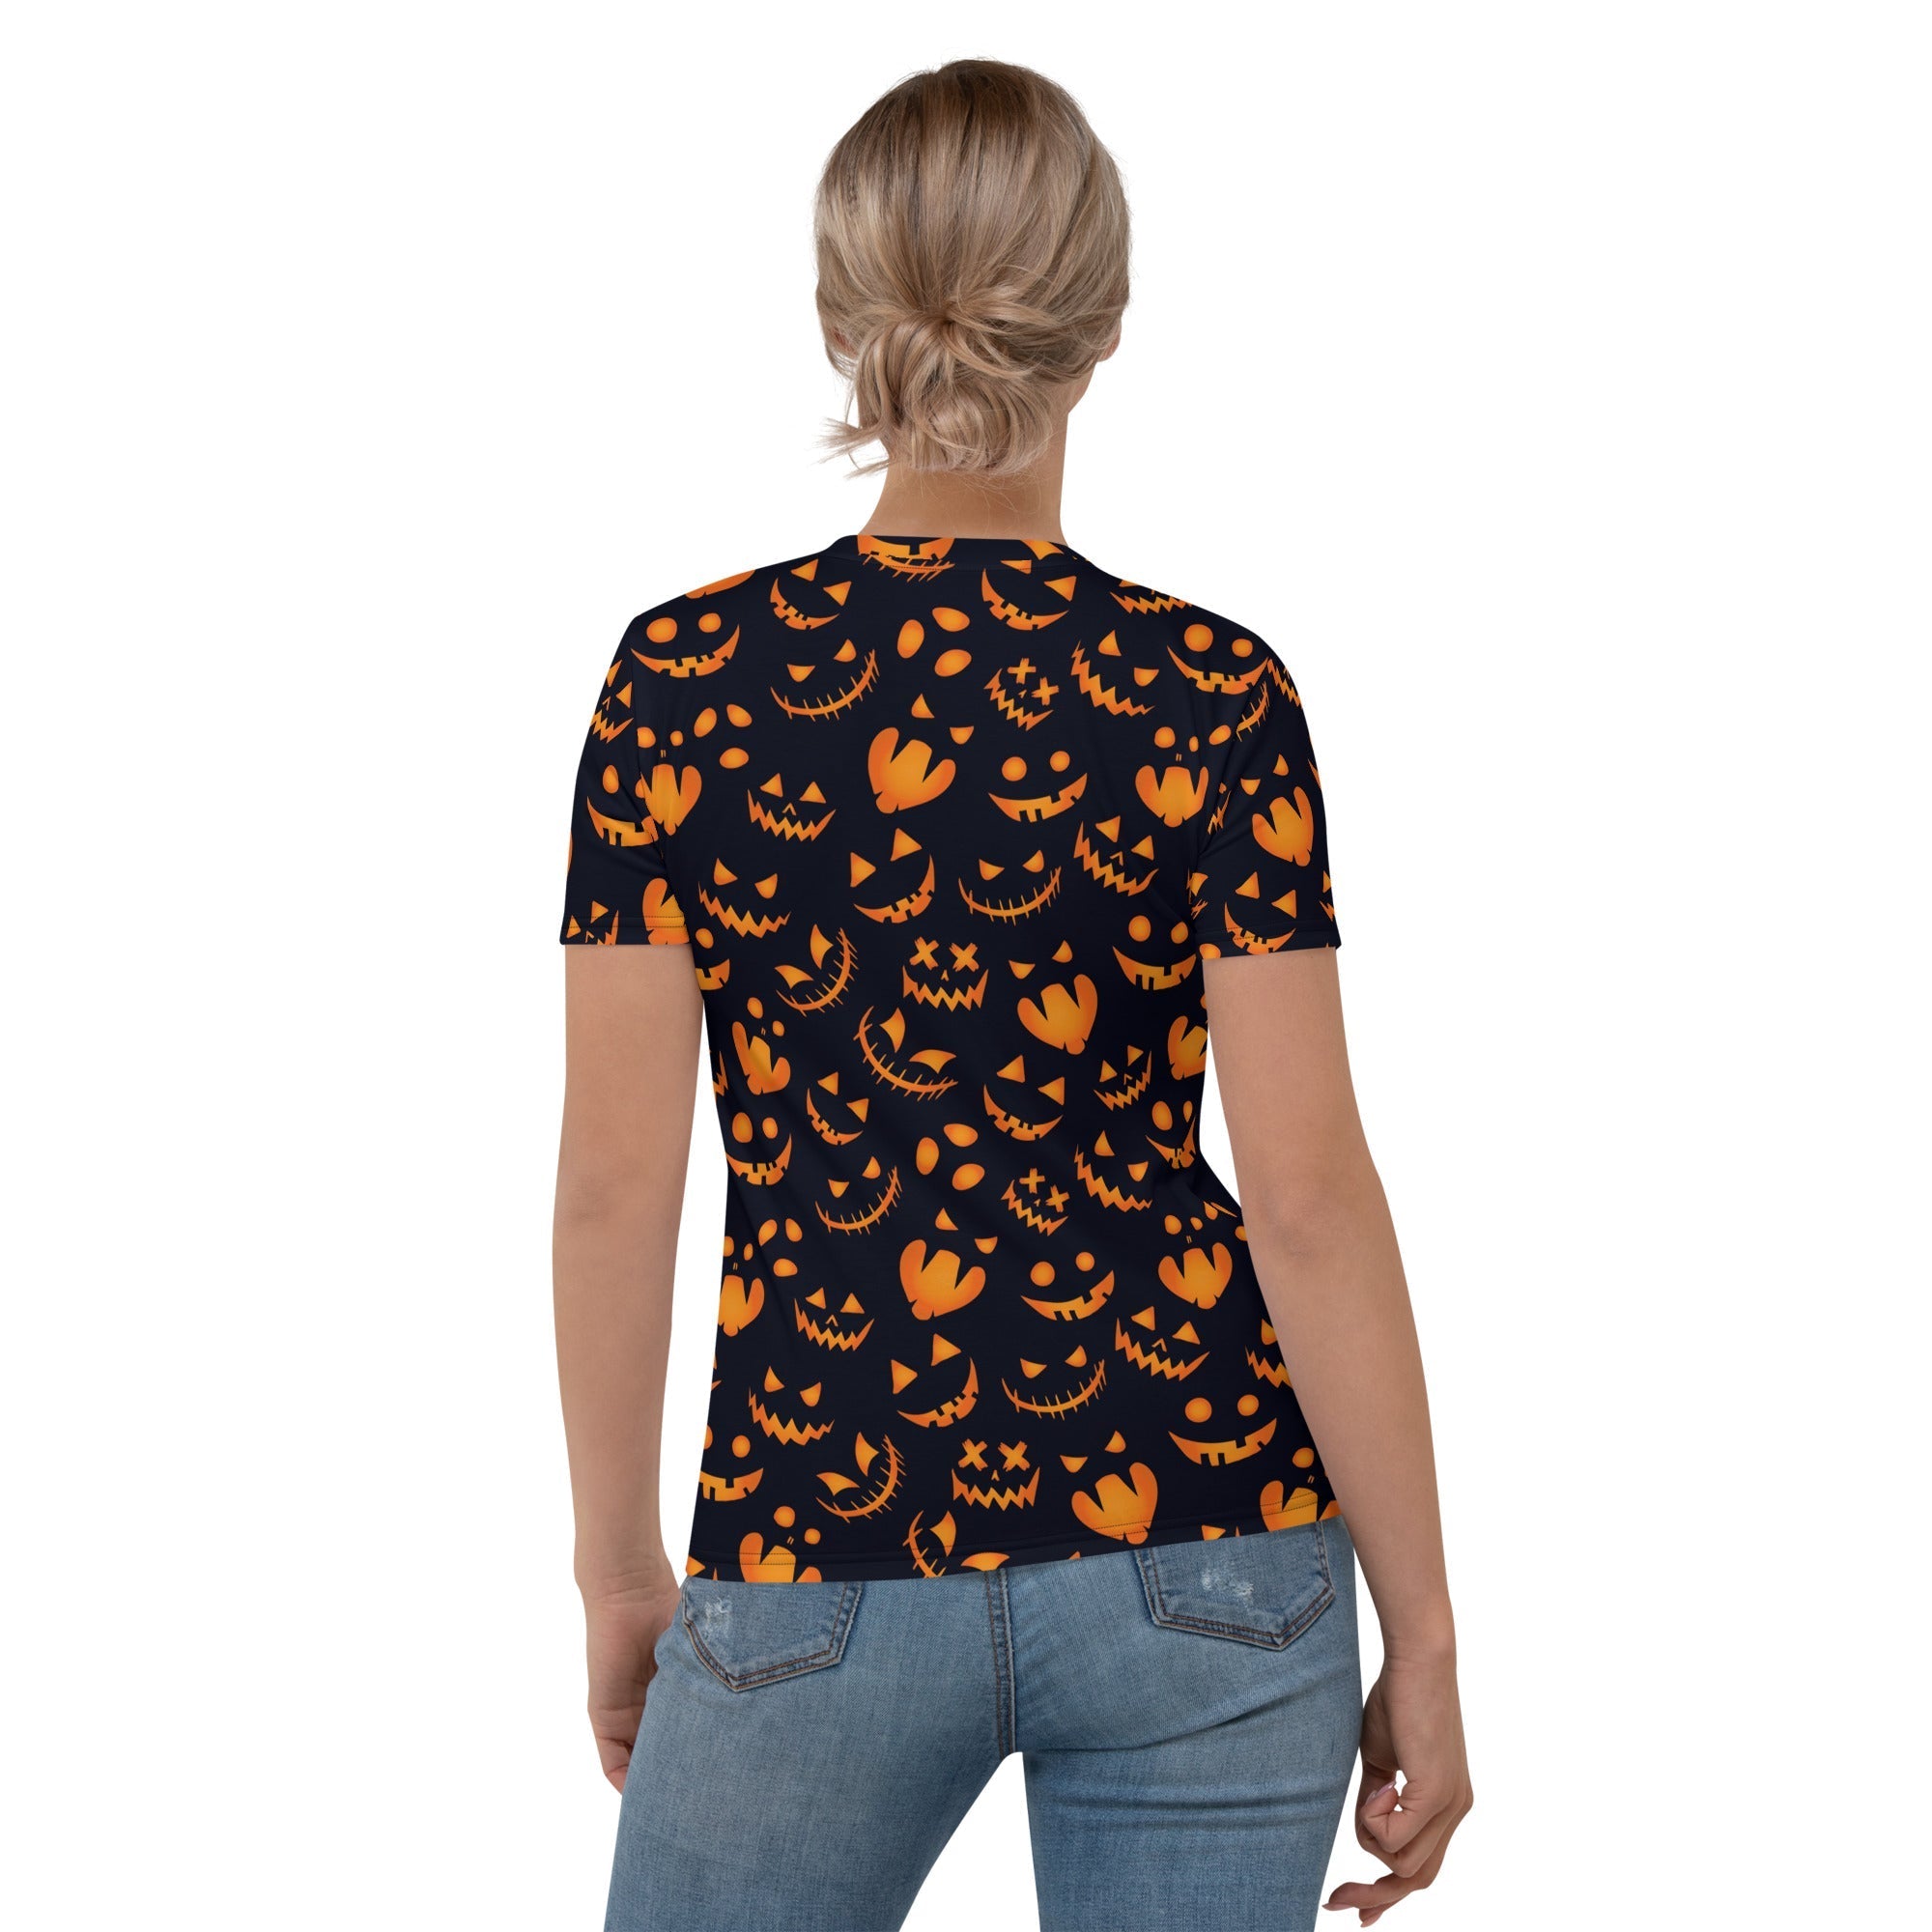 Spooktacular Halloween T-shirt